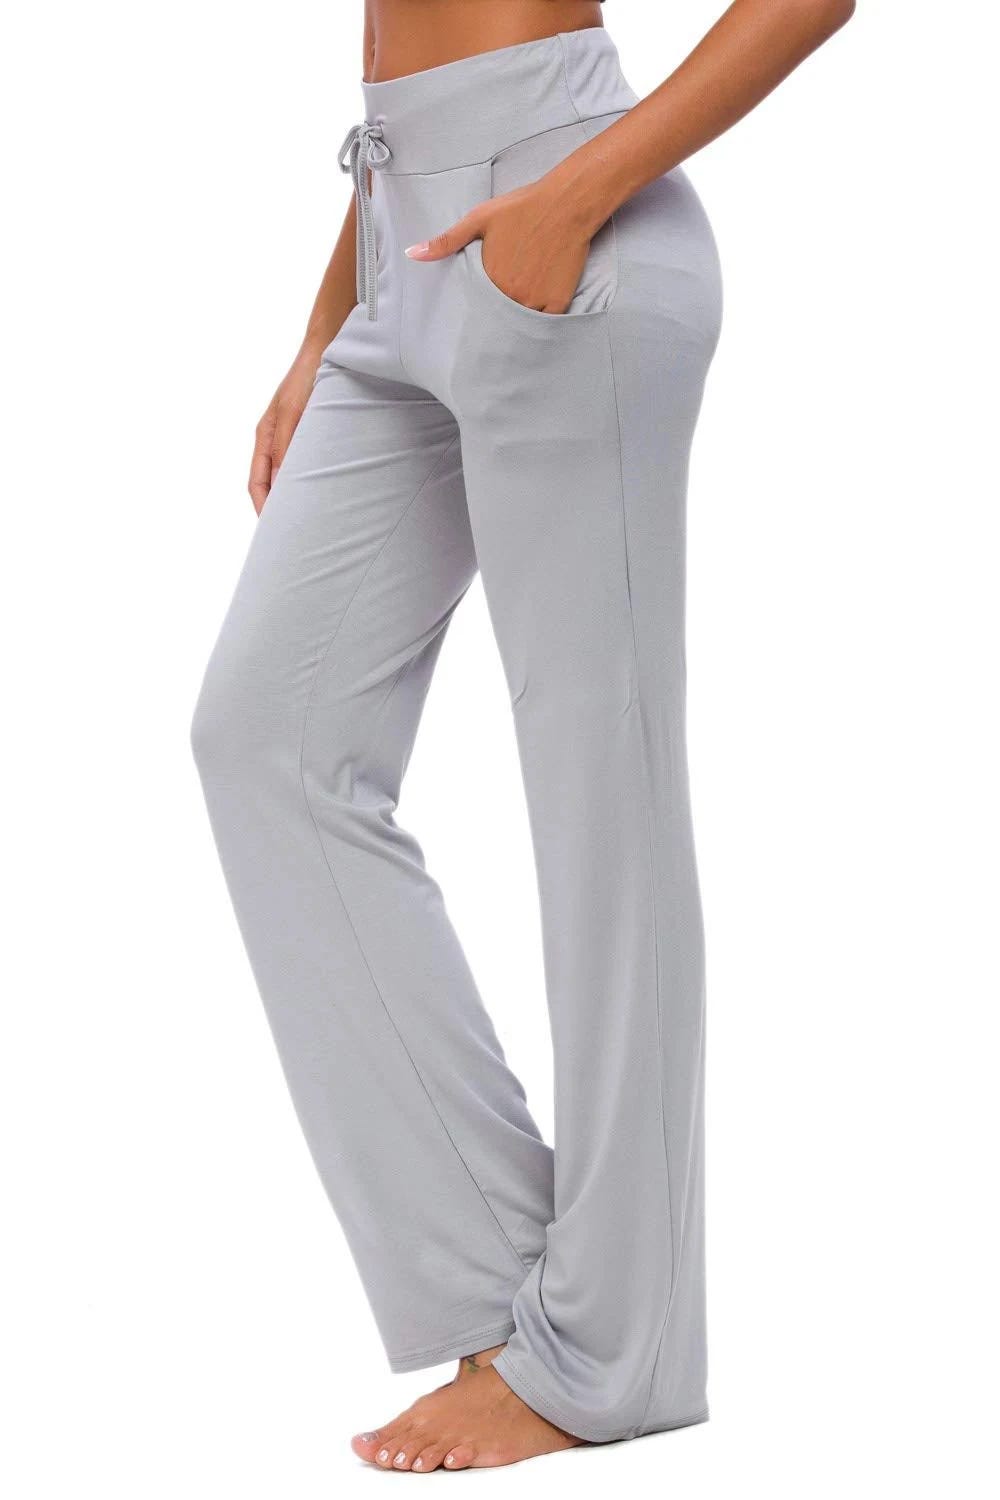 Comfy Stretch Yoga Pants for Ladies (Light Grey) | Image